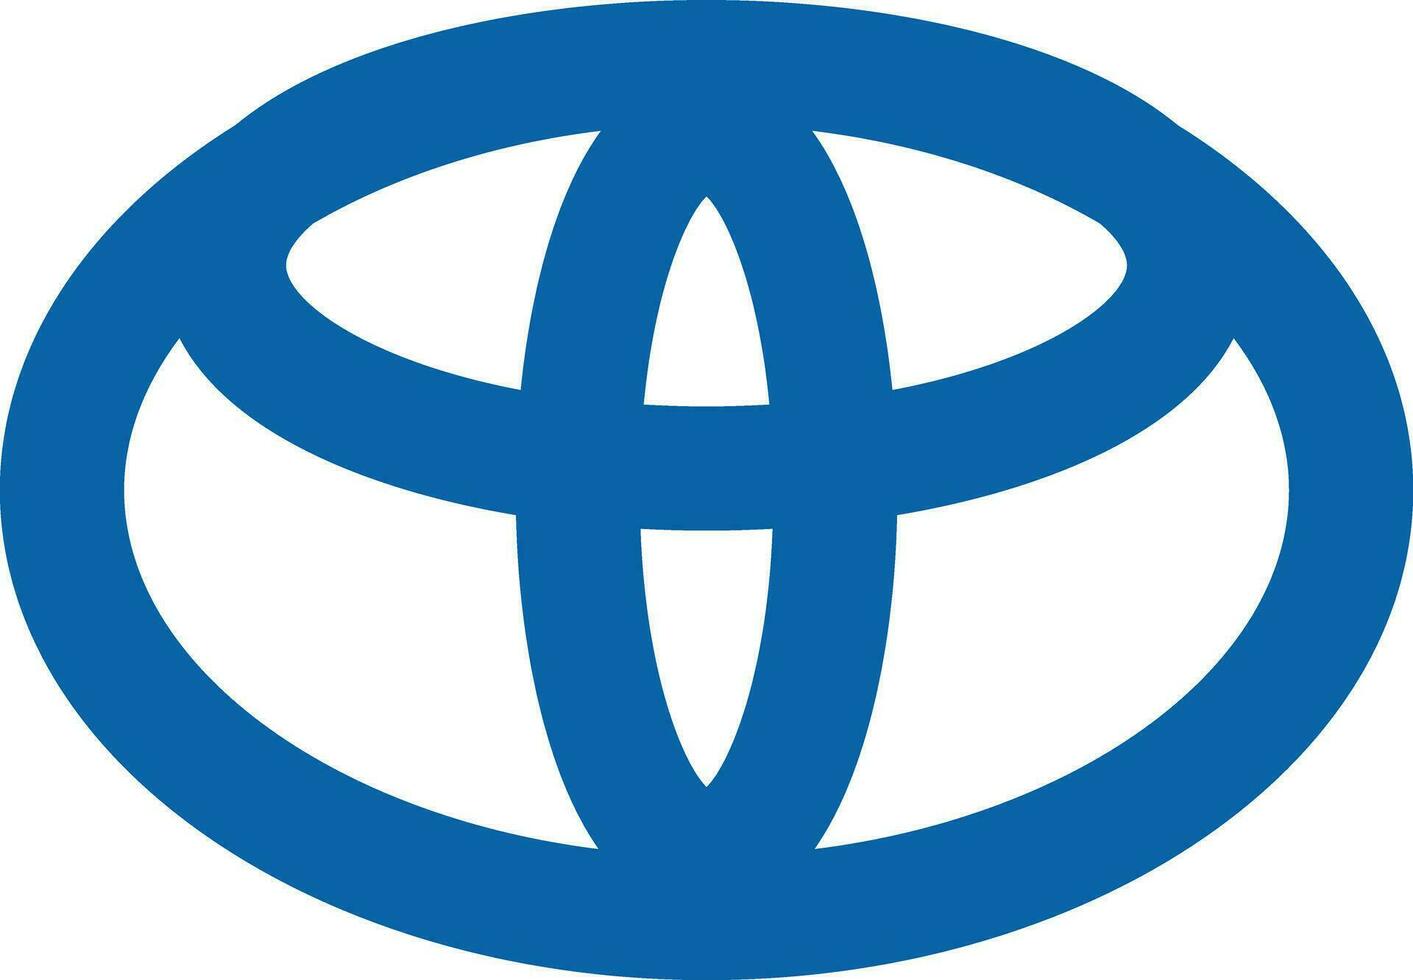 Toyota logo icon car brand sign symbol famous label identity style Top automotive industry leader art design vector. Black automobile emblem sign vector